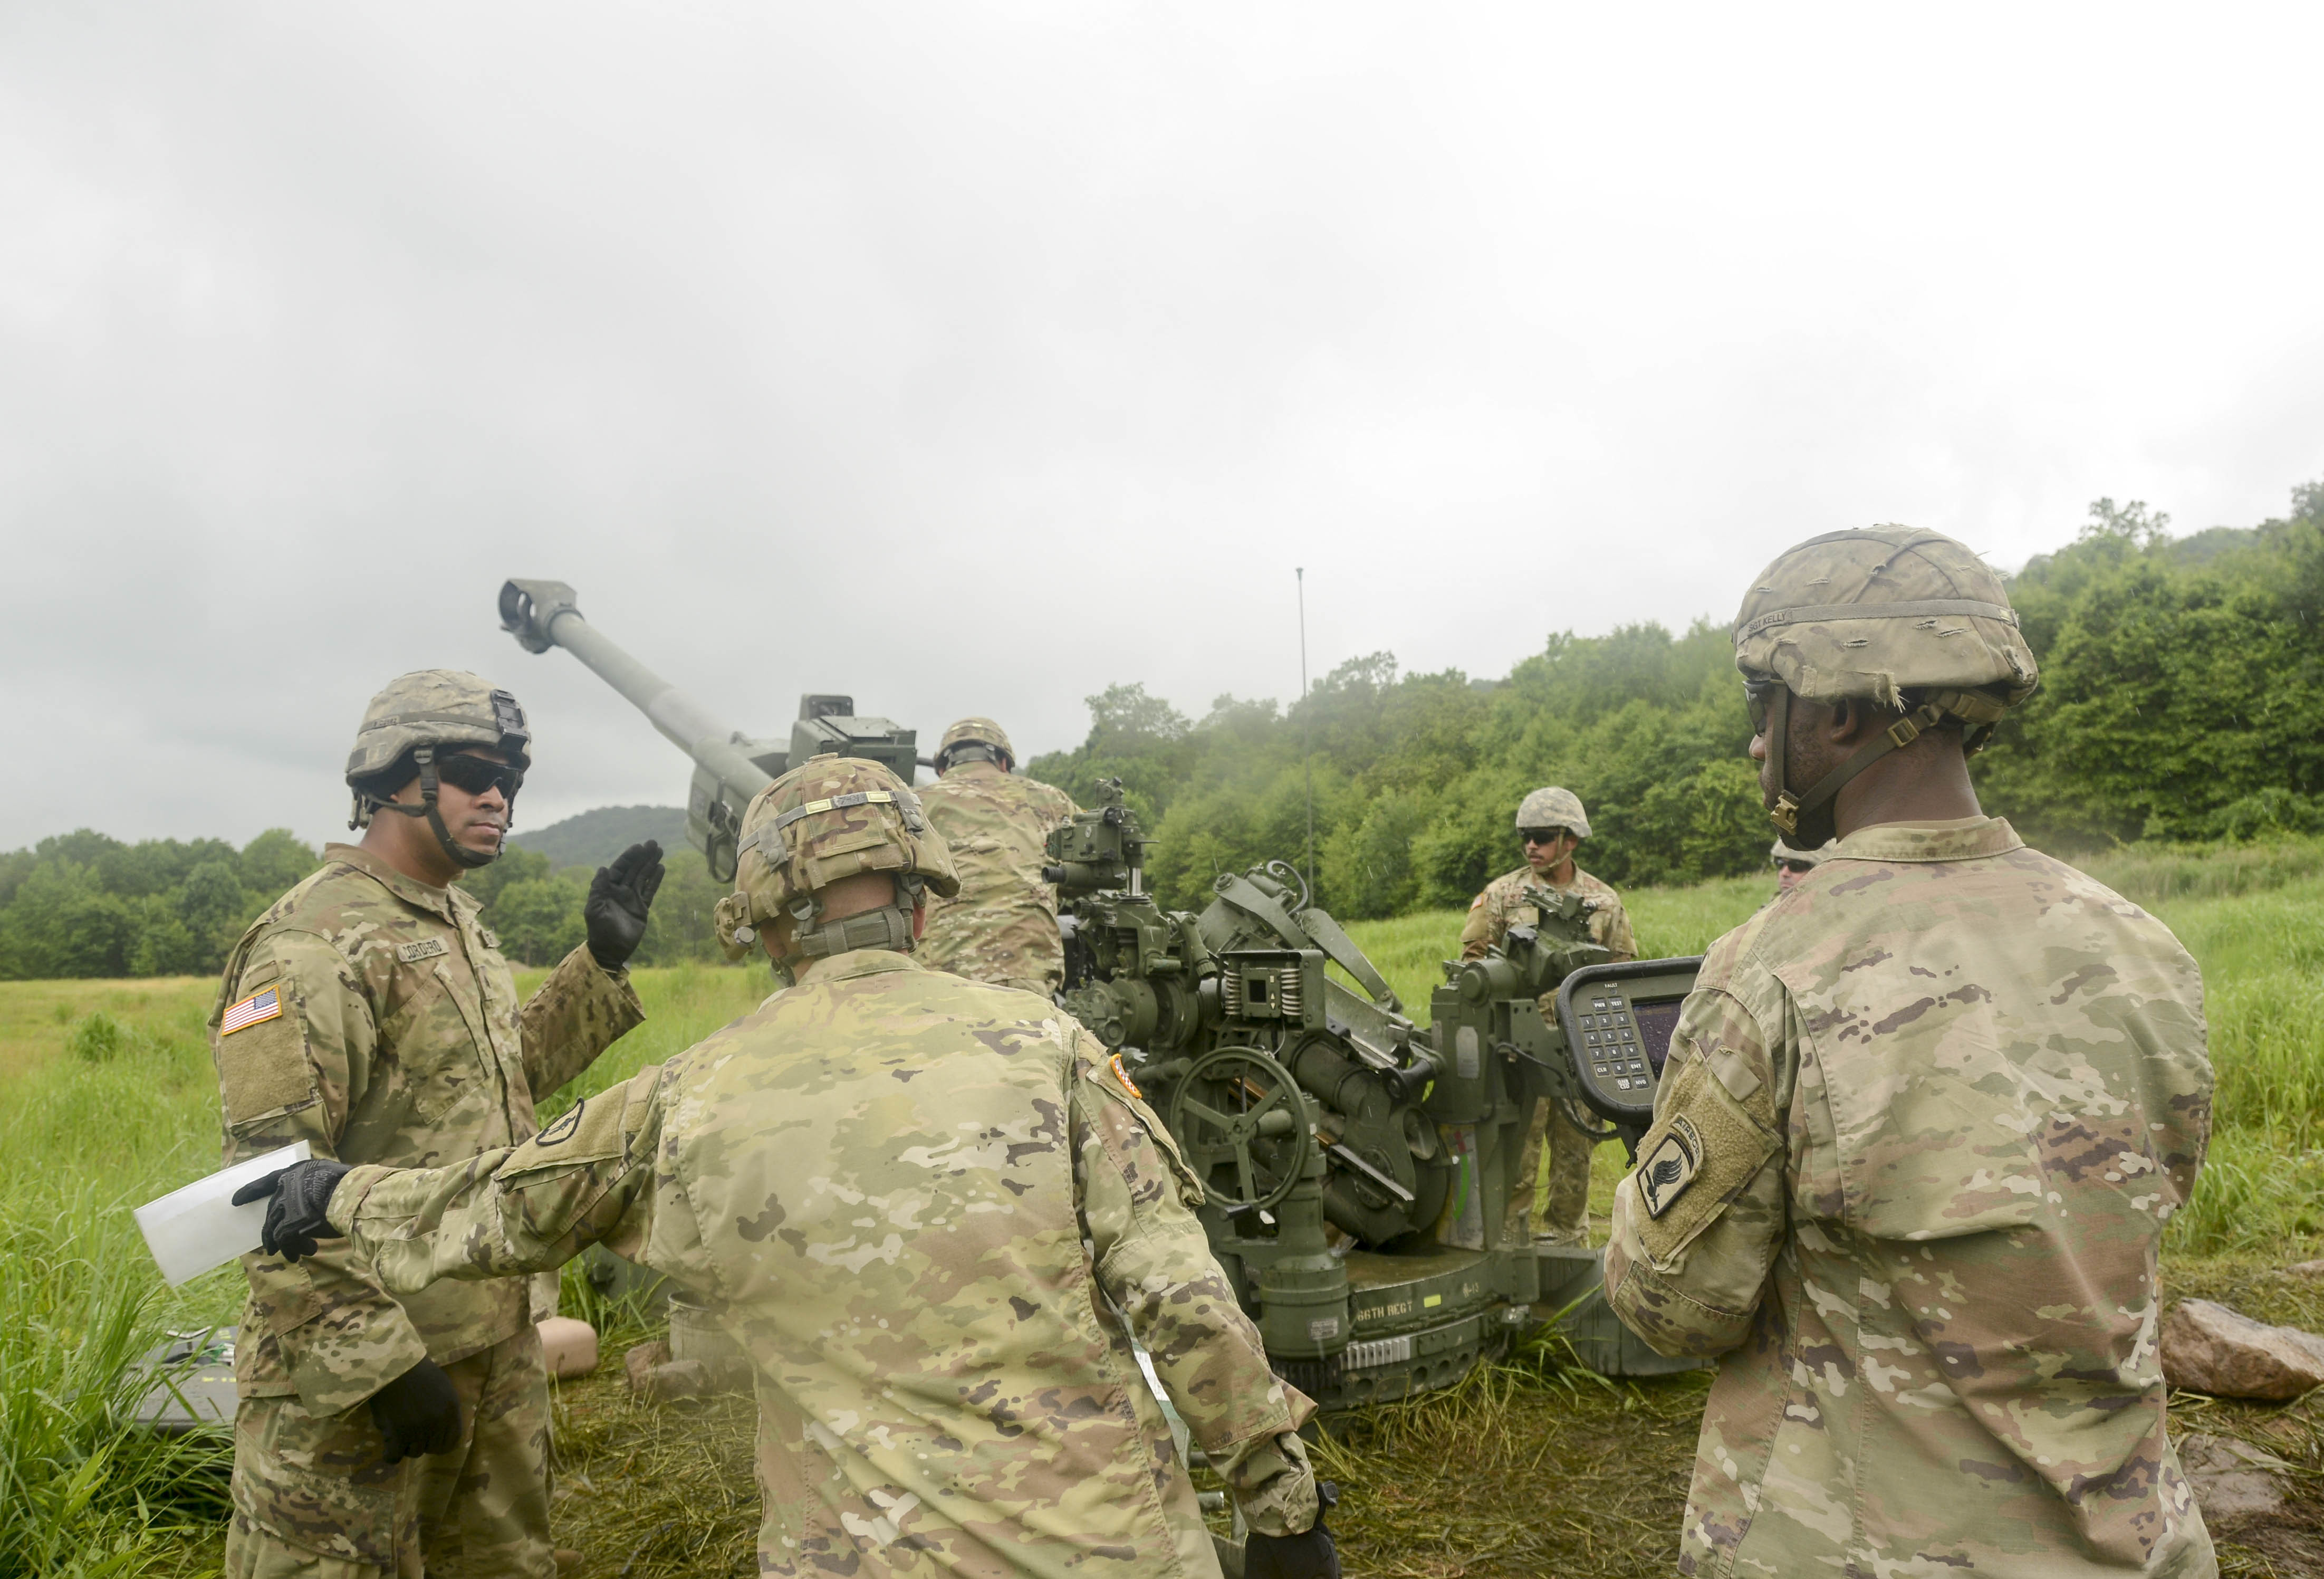 Artillery training at Fort Indiantown Gap > Fort Indiantown Gap > News